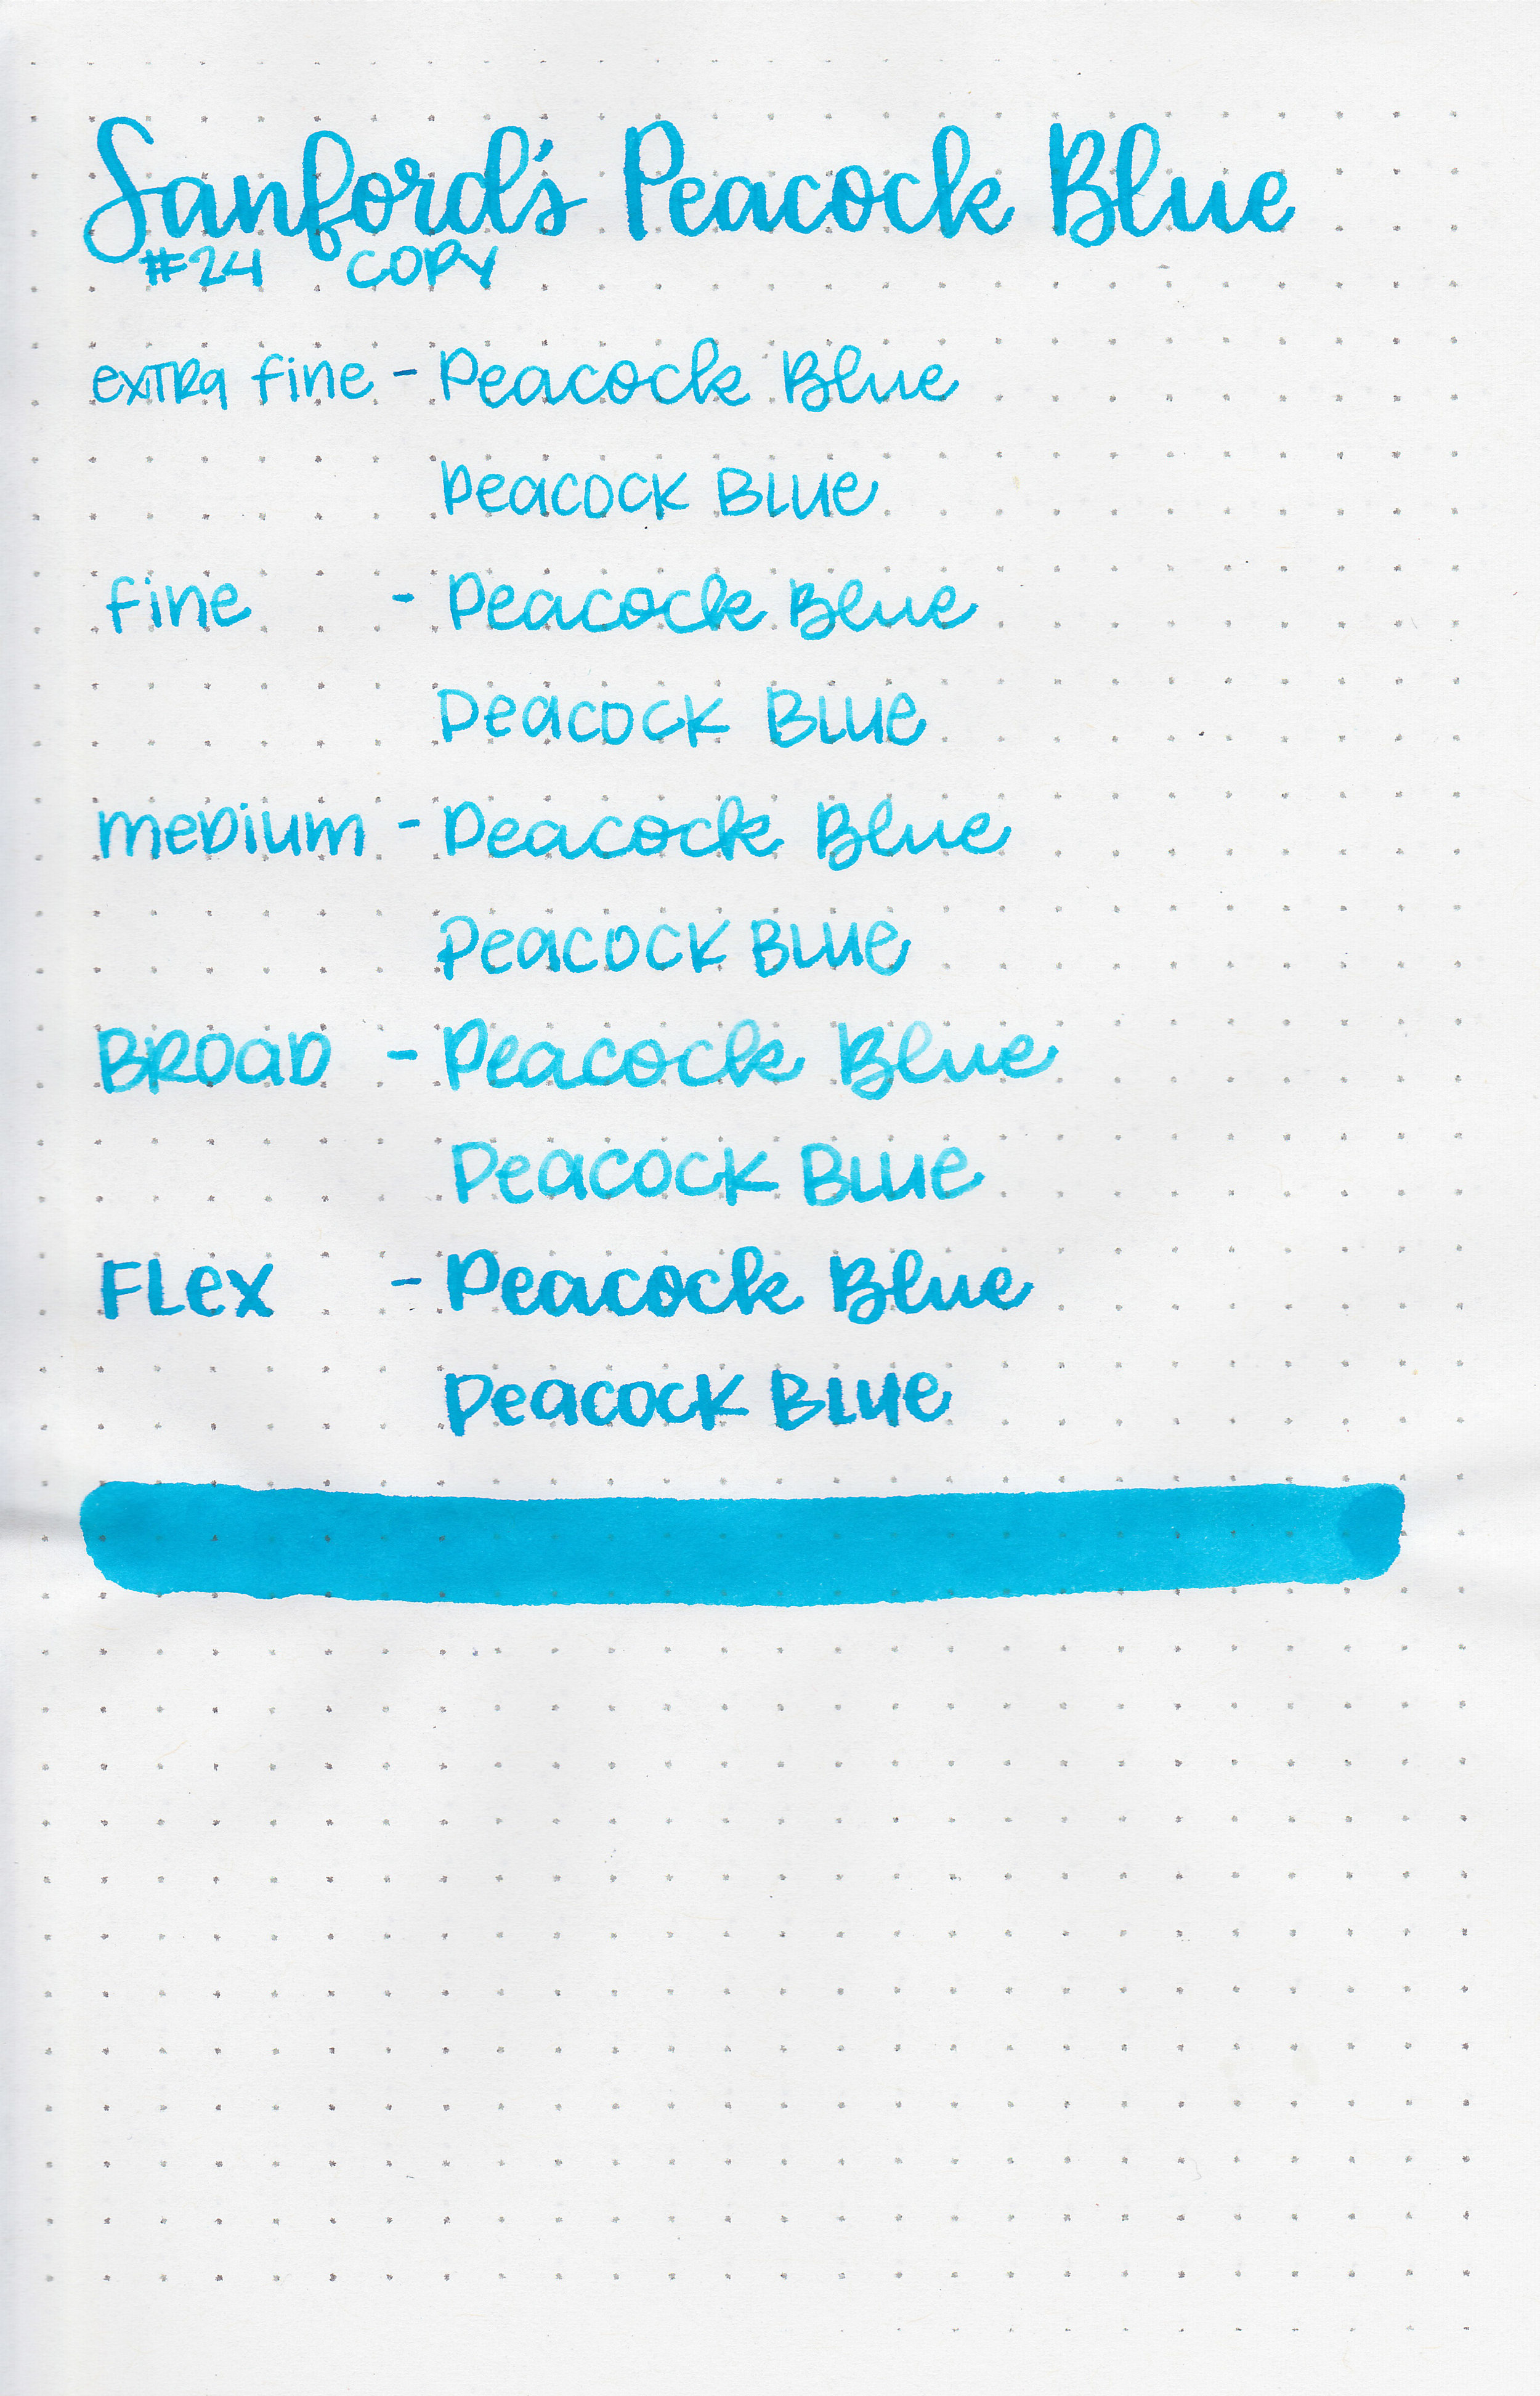 snf-peacock-blue-11.jpg